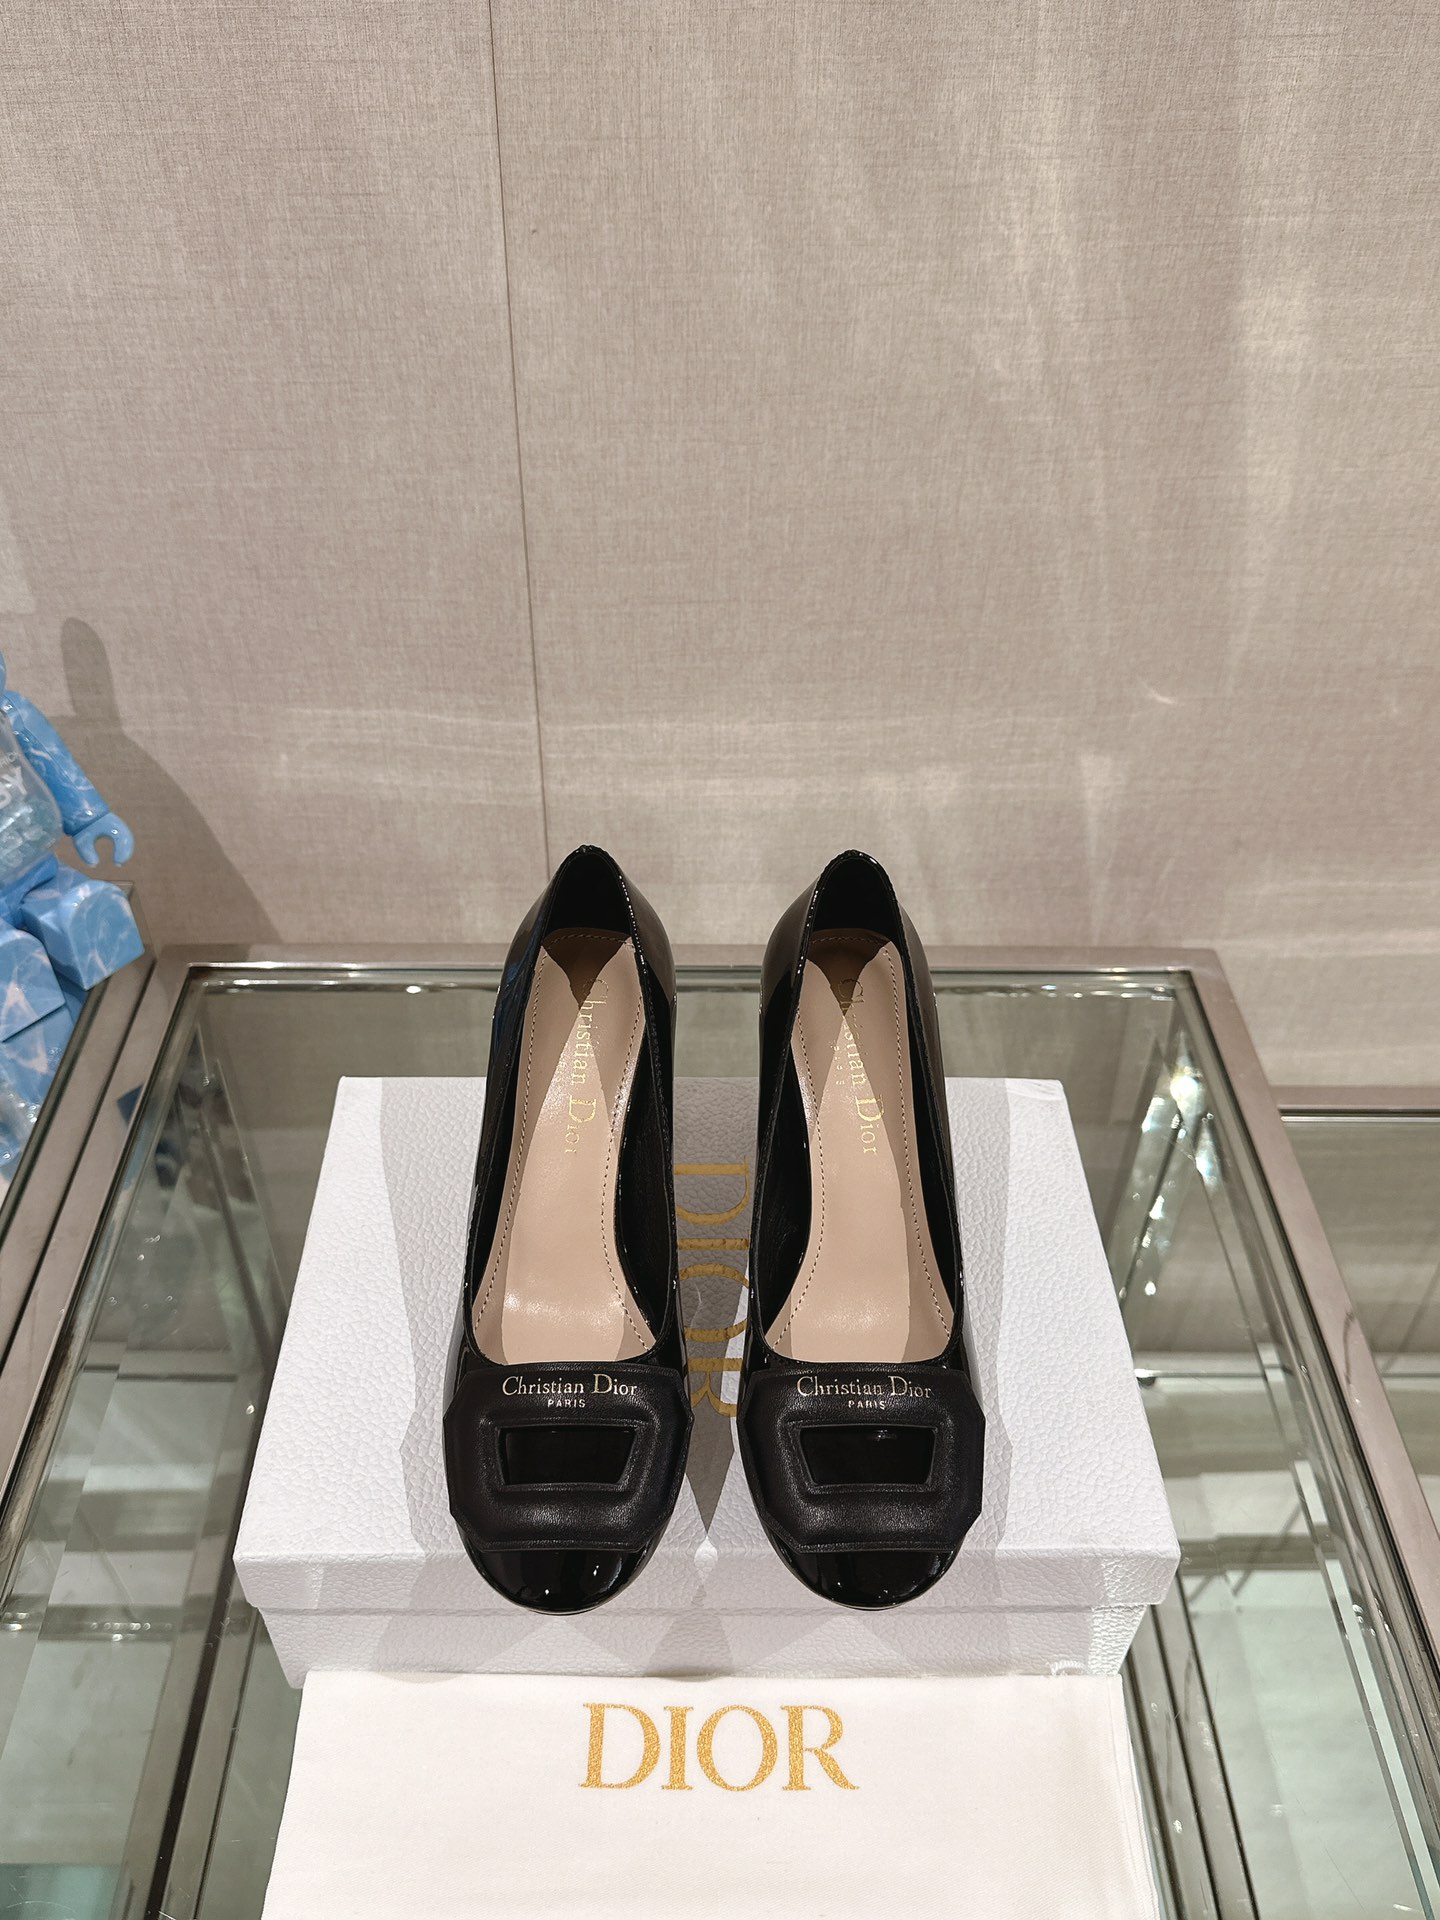 Dior High Heel Pumps Single Layer Shoes Cowhide Genuine Leather Patent Sheepskin Fashion